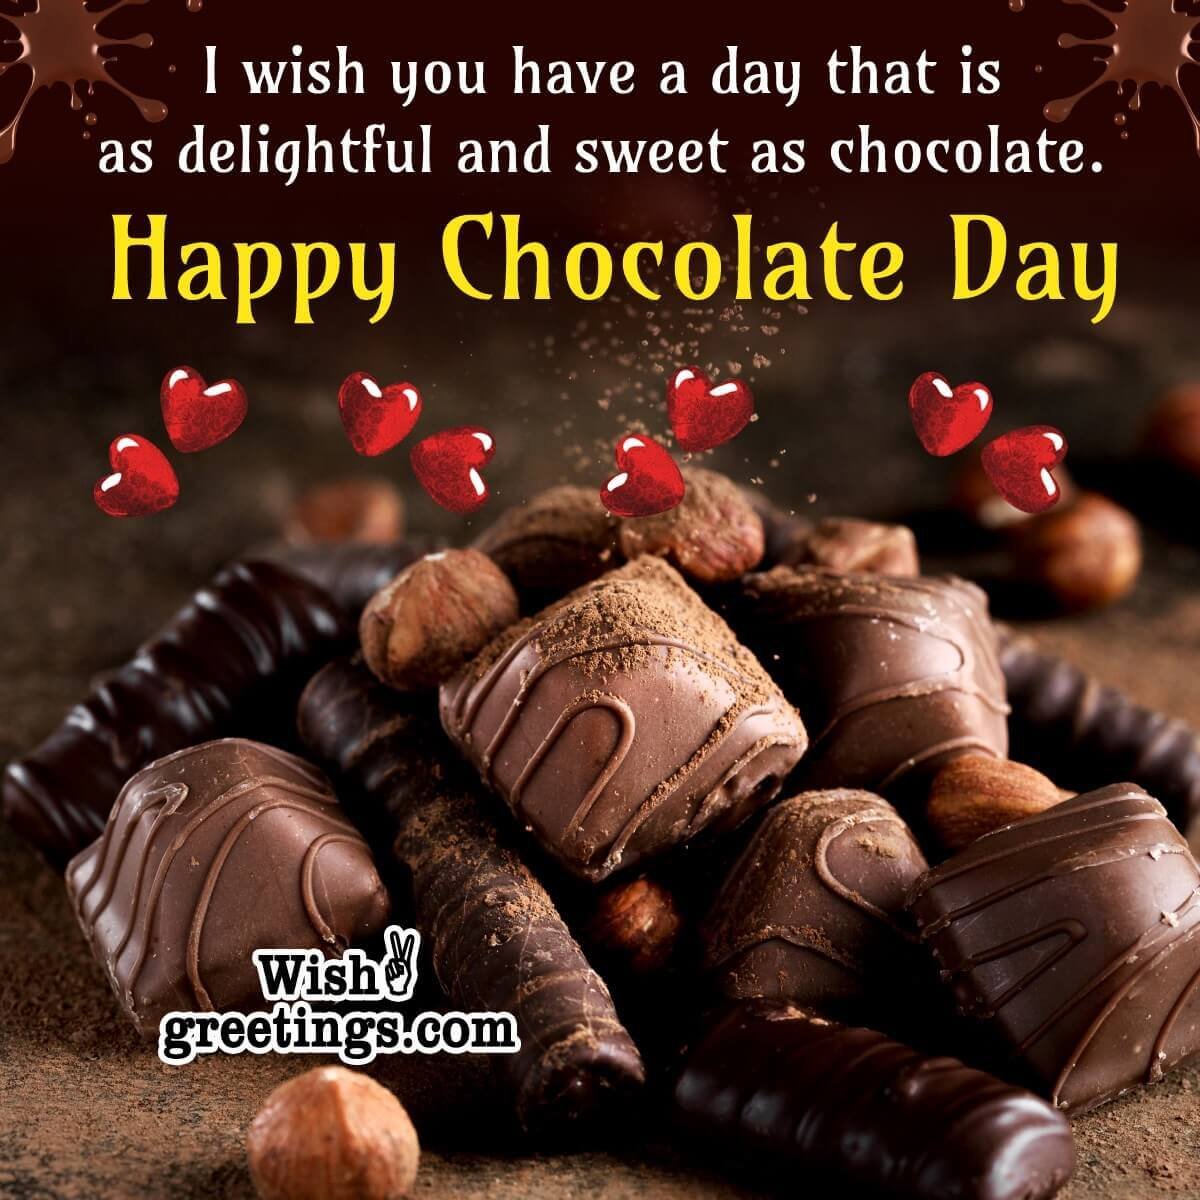 Chocolate Day Greeting Image